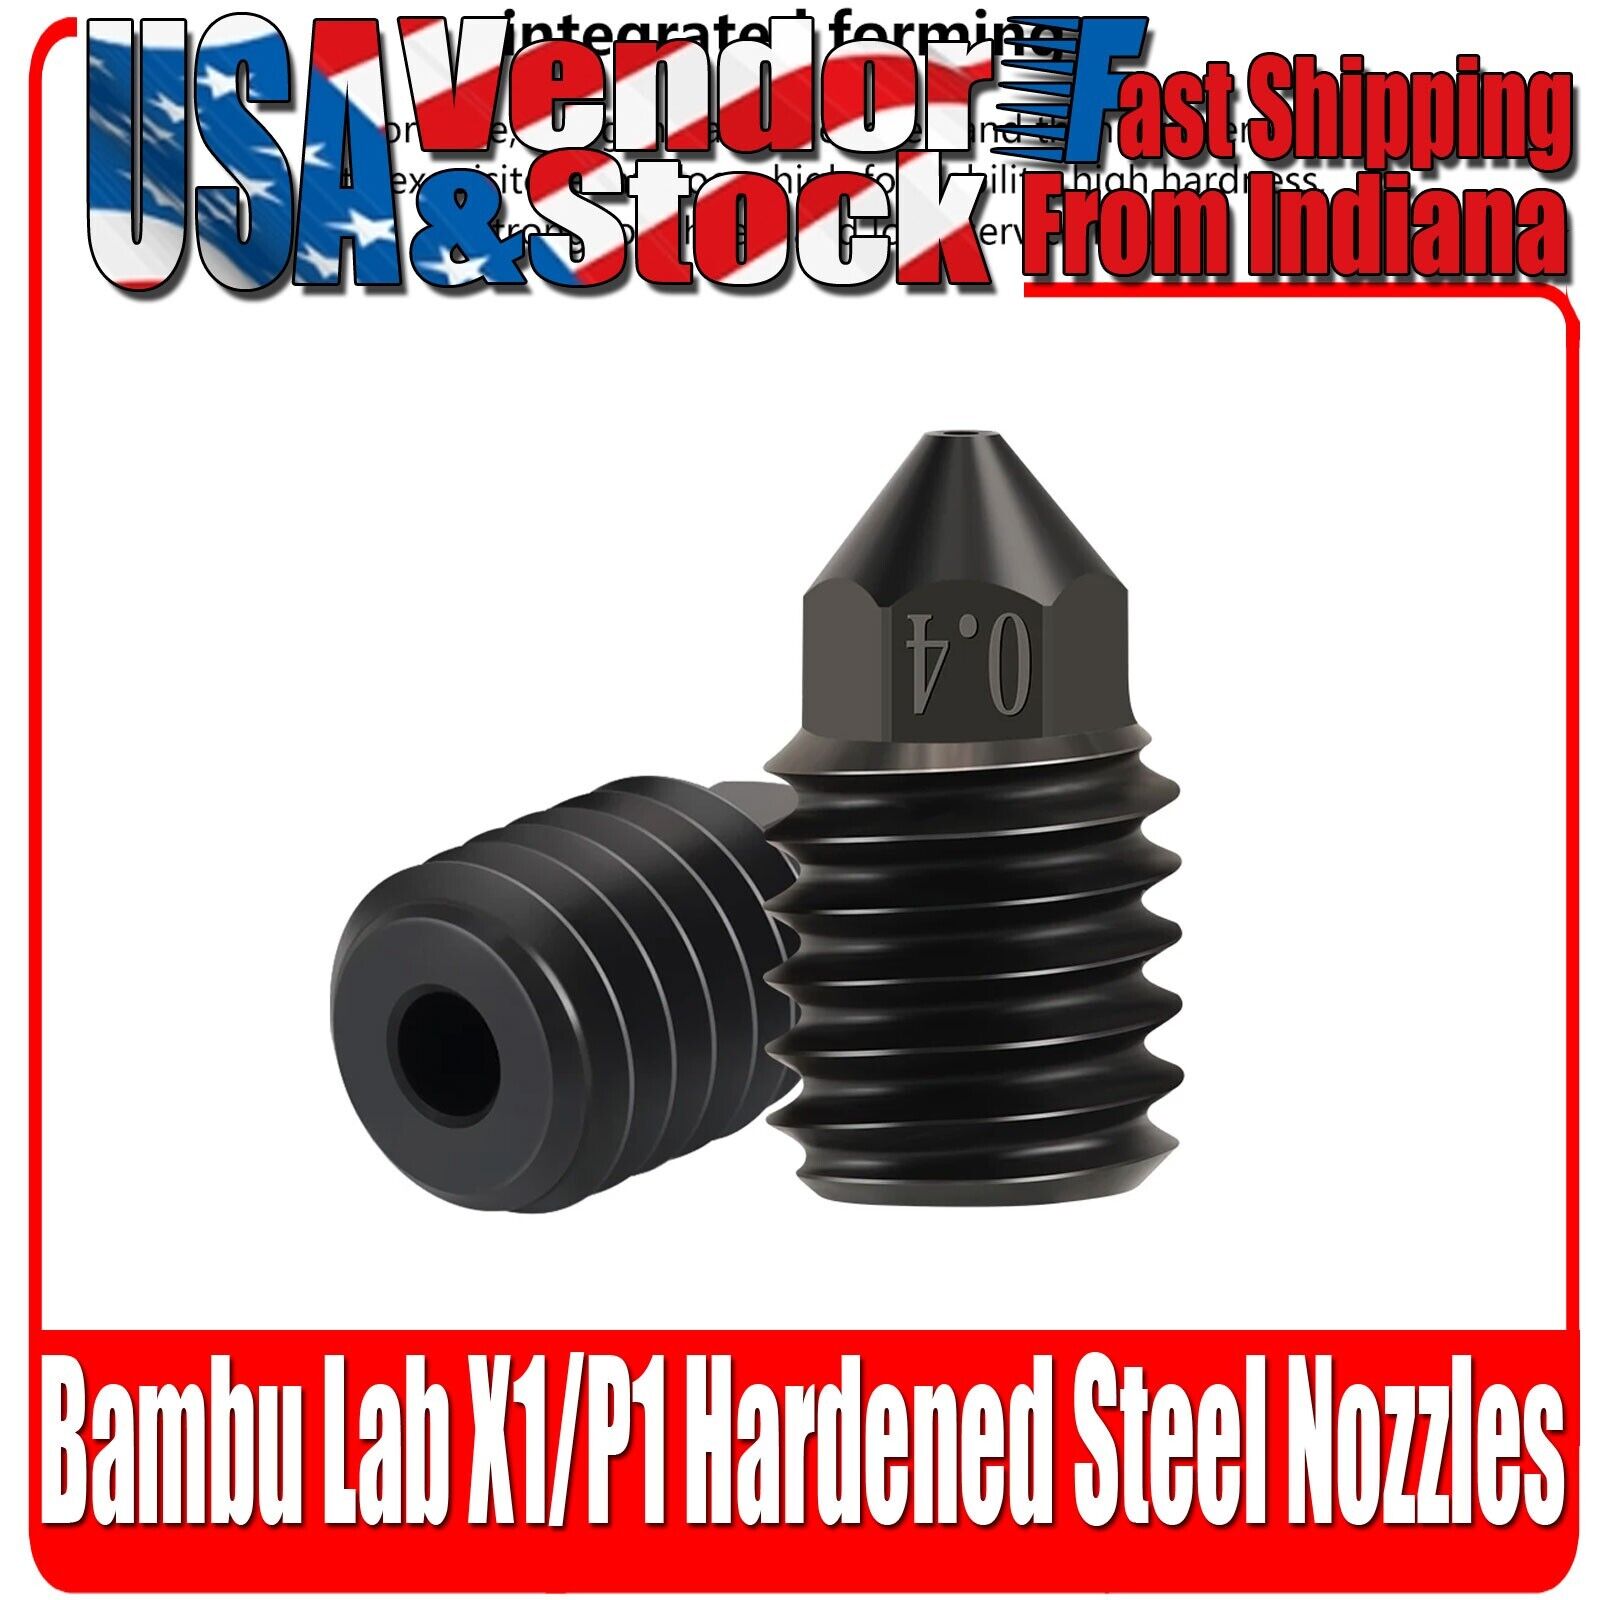 Hardened Steel Nozzle for Bambu Lab X1/P1P, 500°C Nozzle for Bambu Lab Hotend